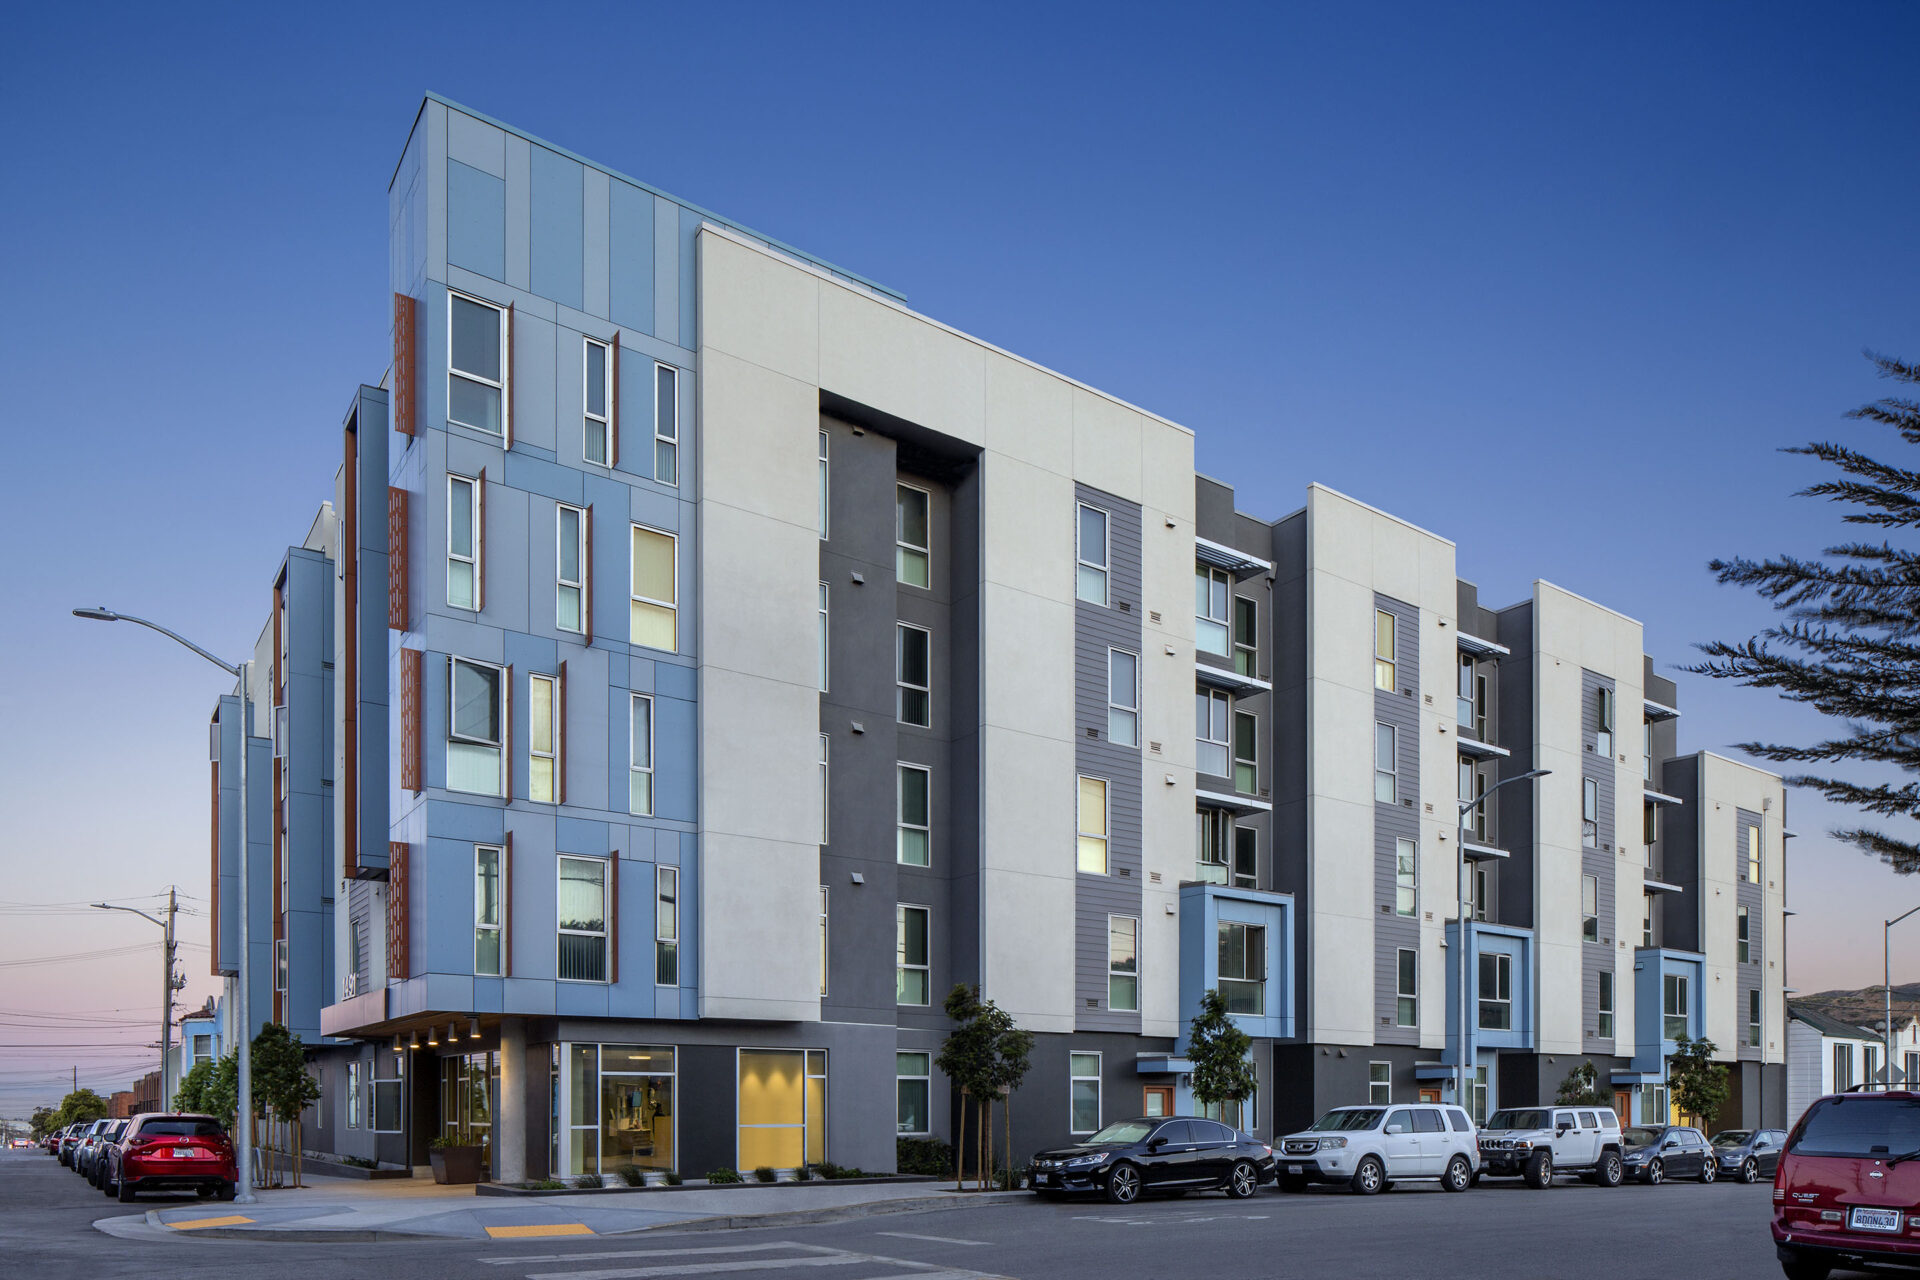 Cahill Contractors Affordable Housing Experience: Sunnydale Parcel Q